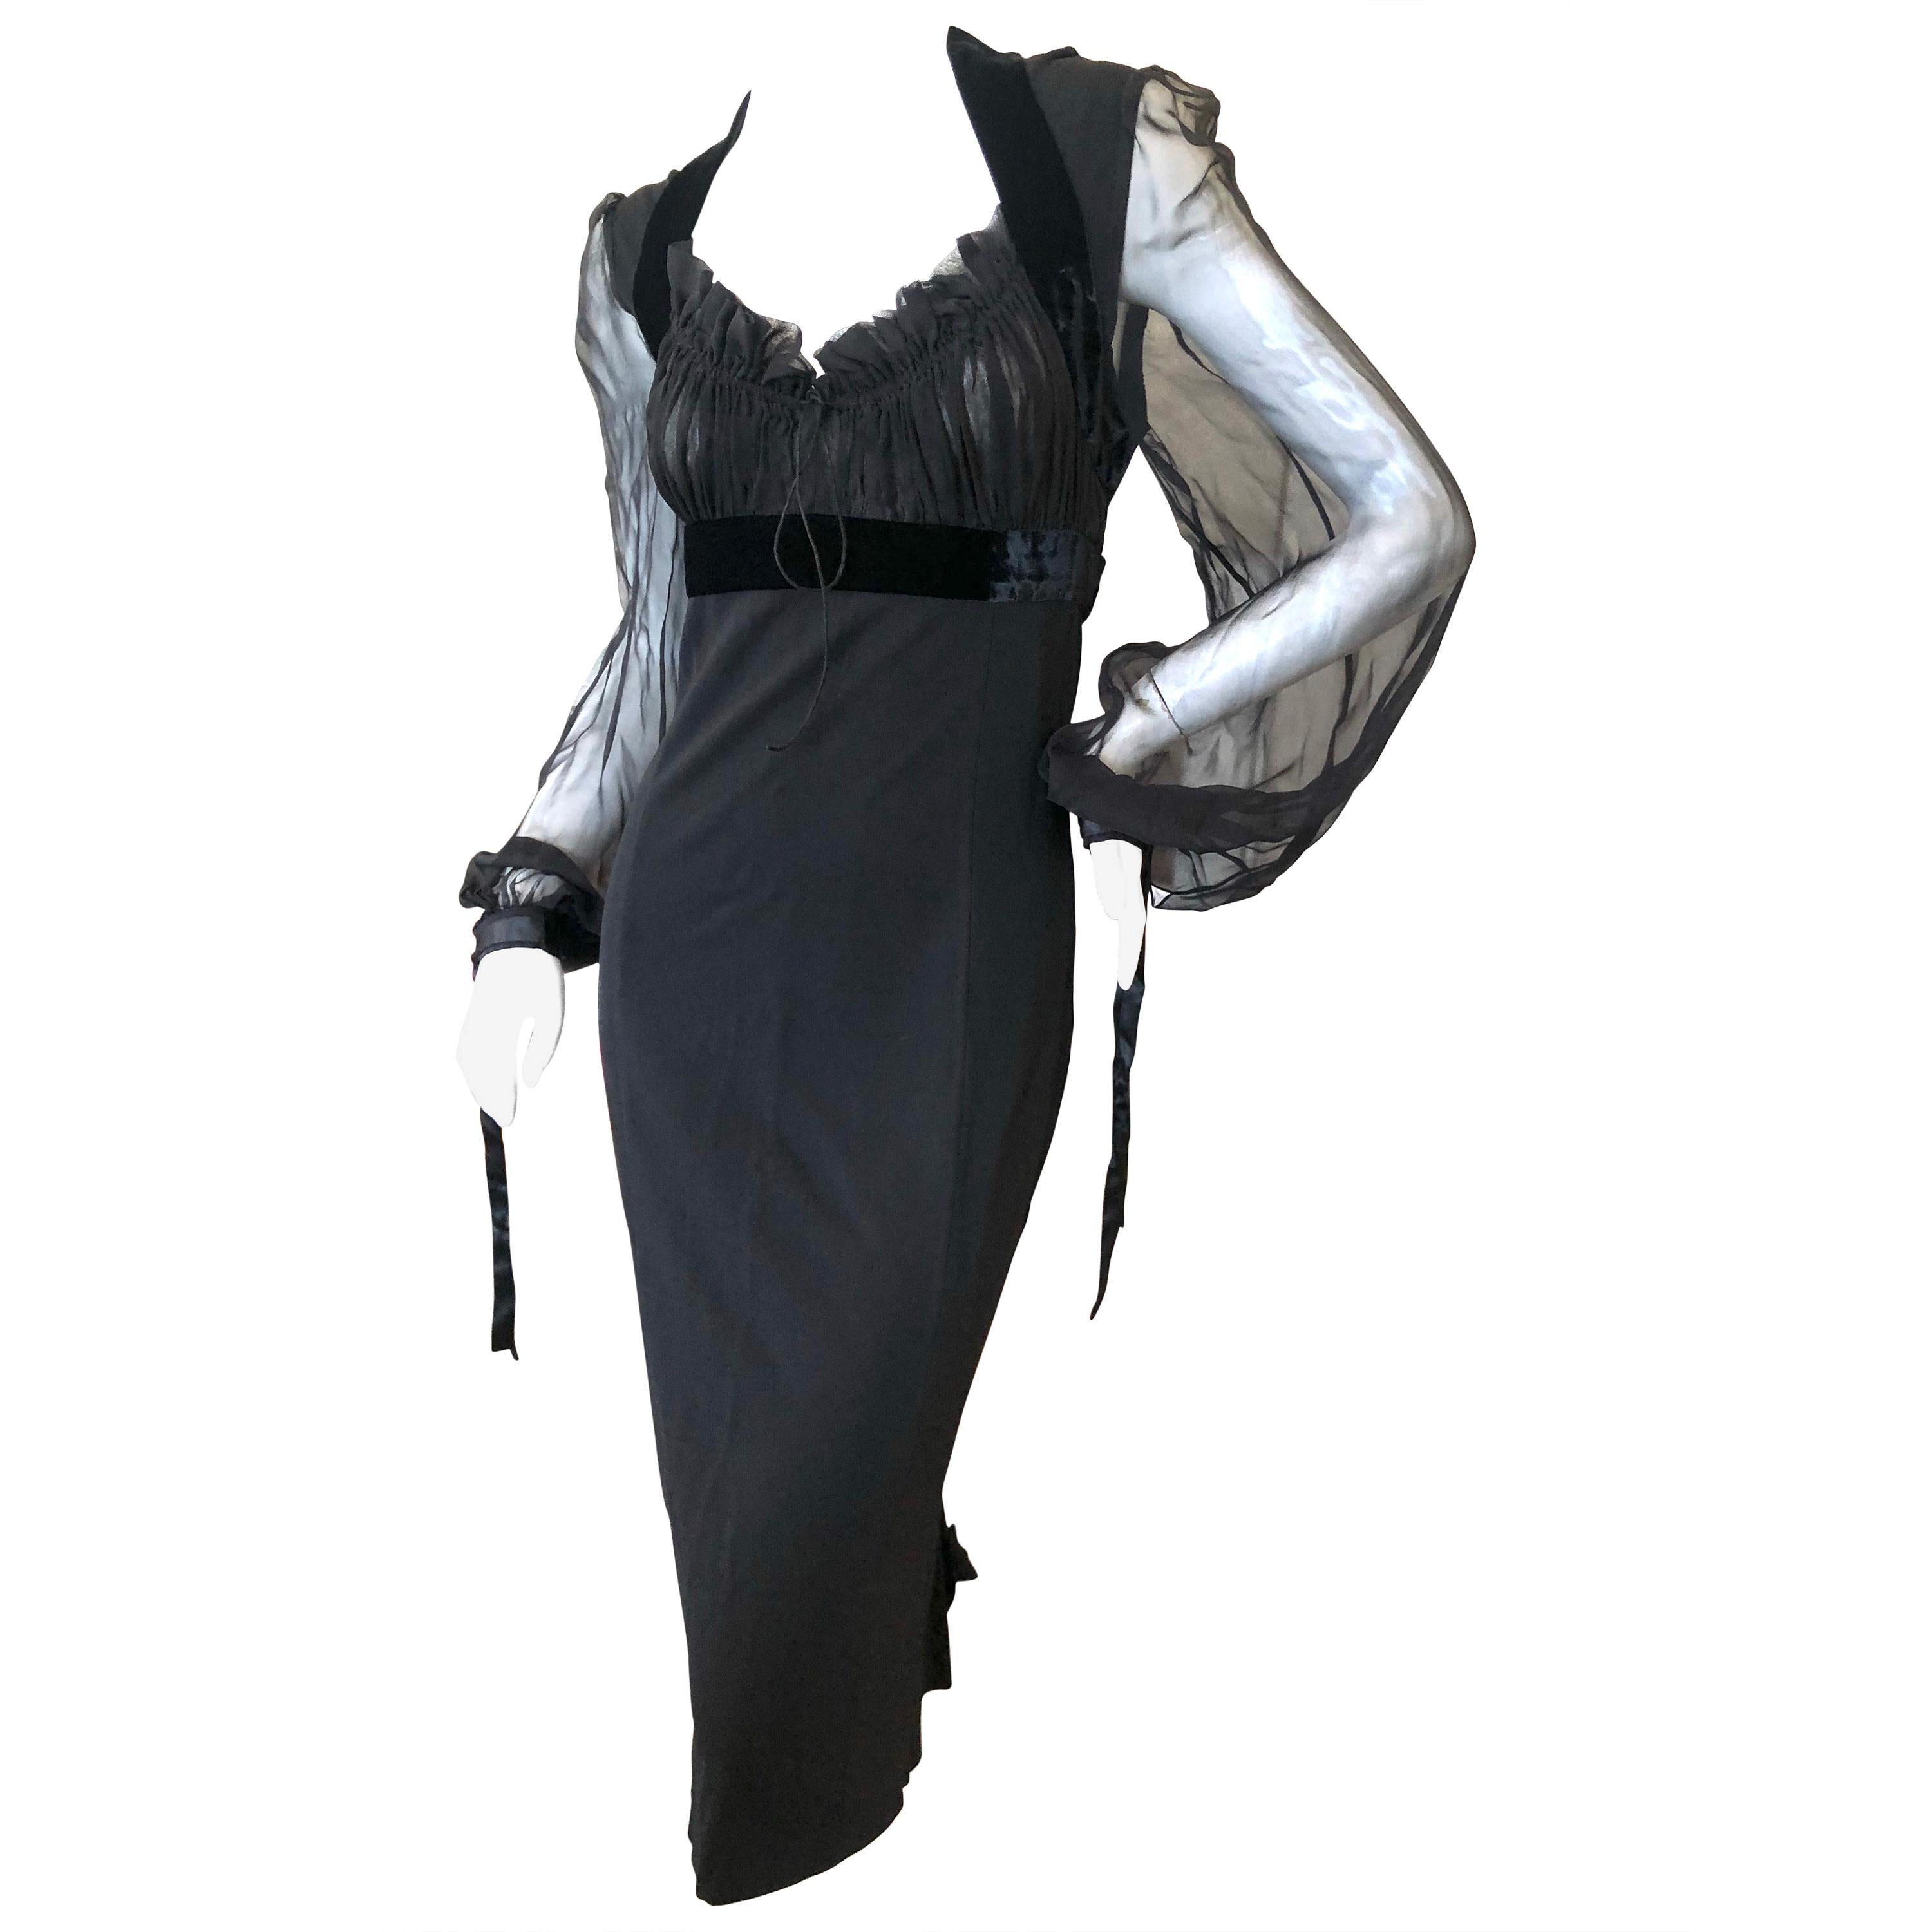 Gianfranco Ferre Vintage 80's Little Black Dress with Sheer Bishop Sleeves